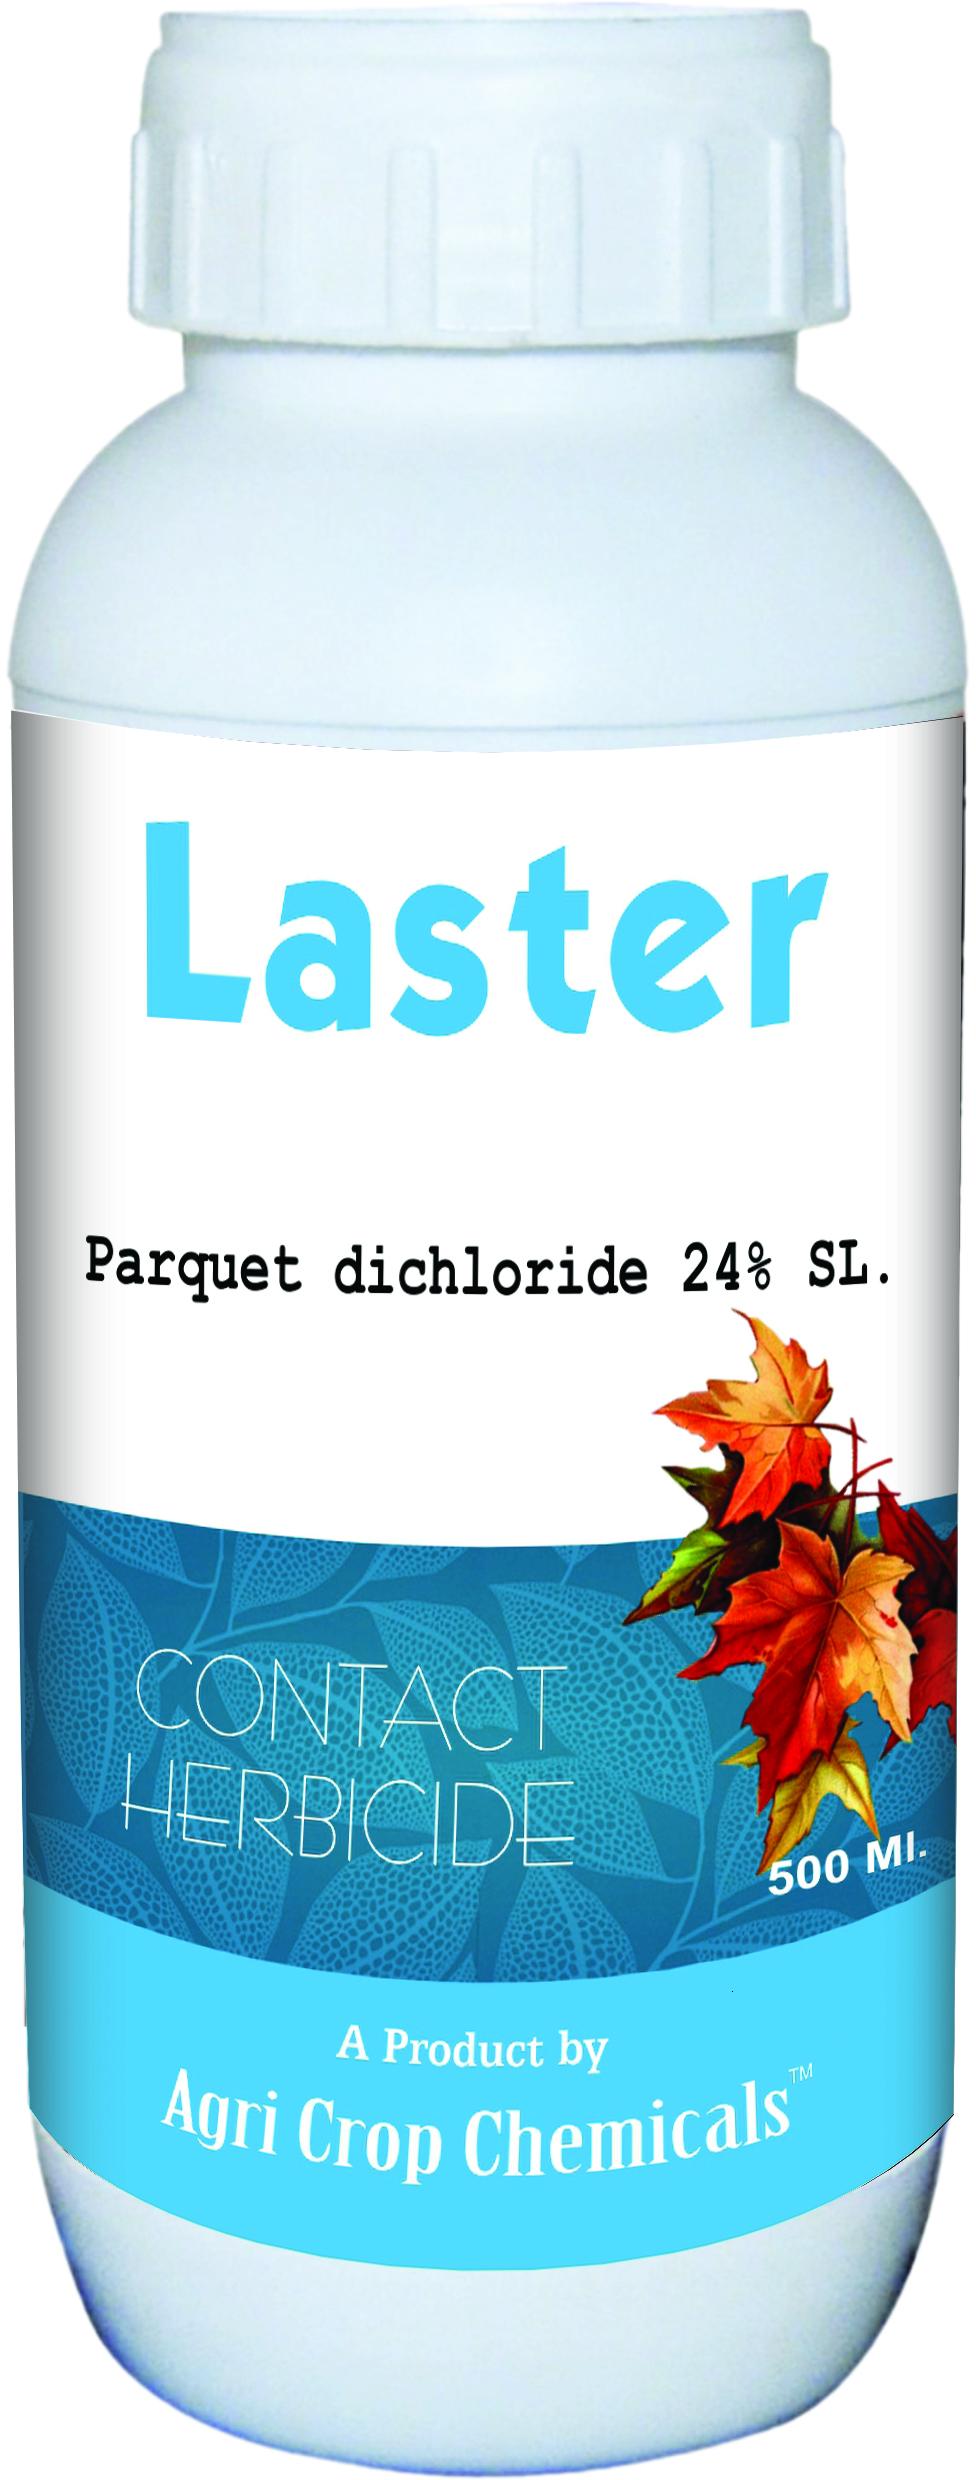 Parquet Dichloride 24%  SL